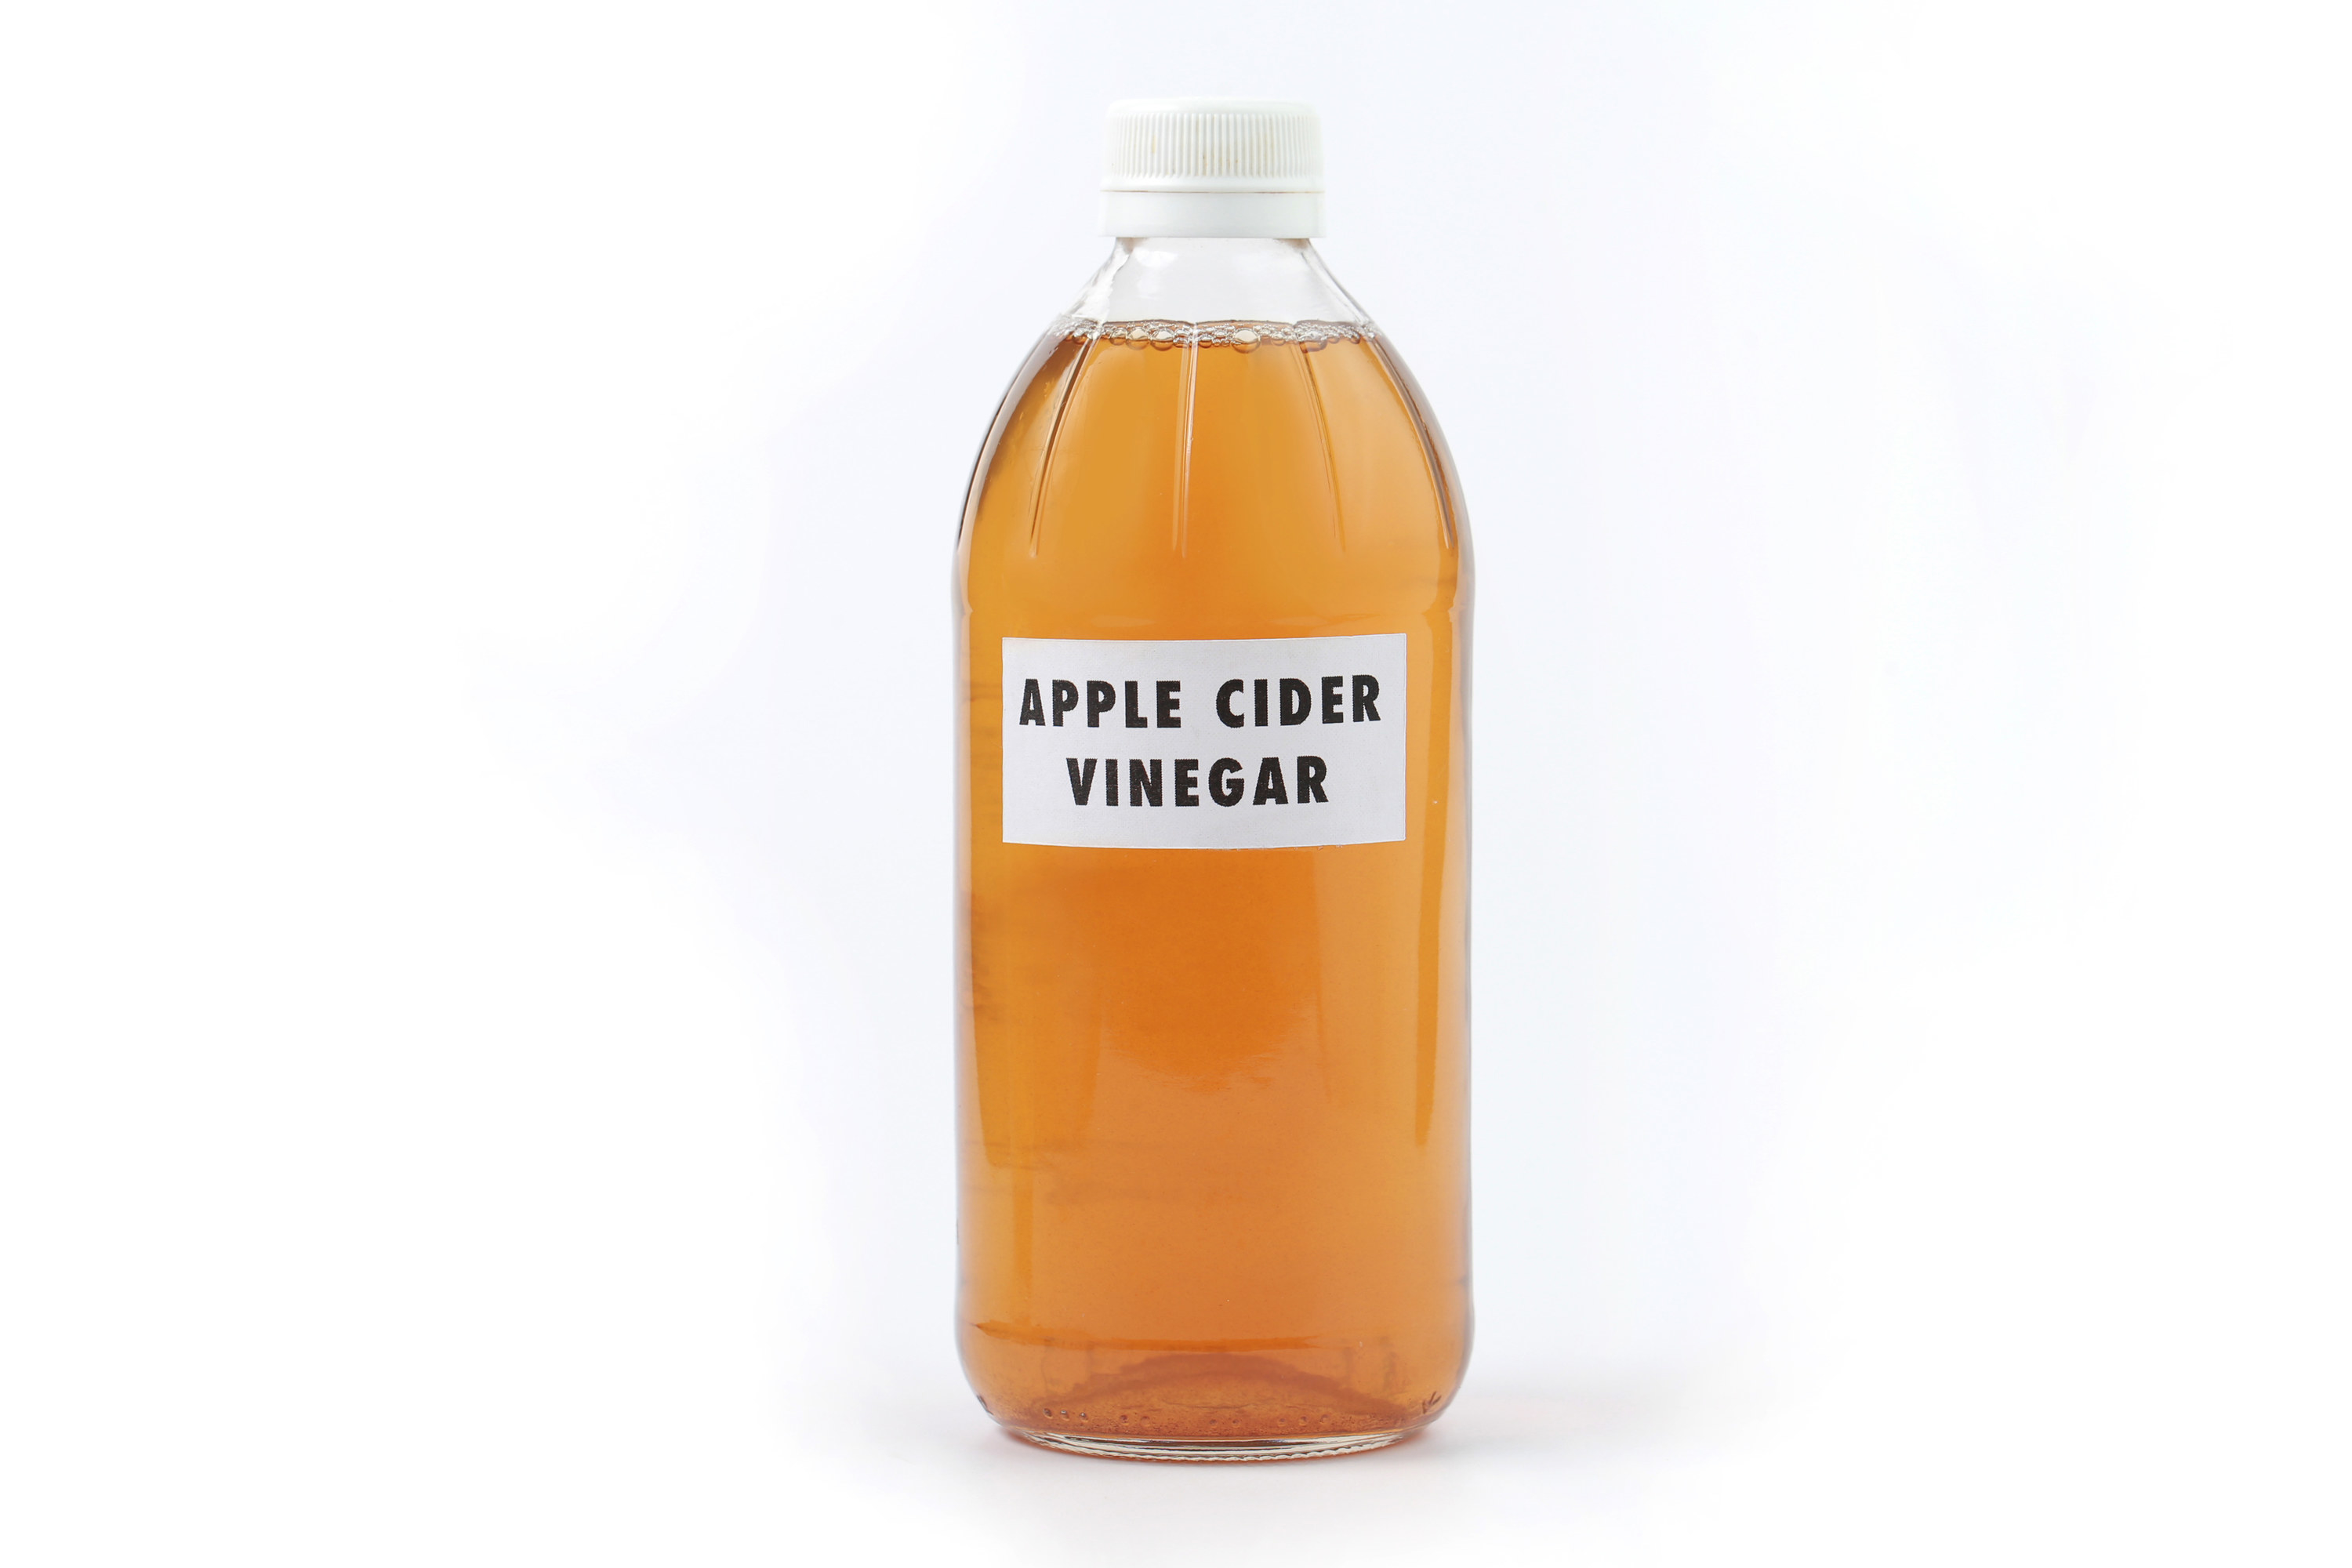 A bottle of apple cider vinegar against a white background